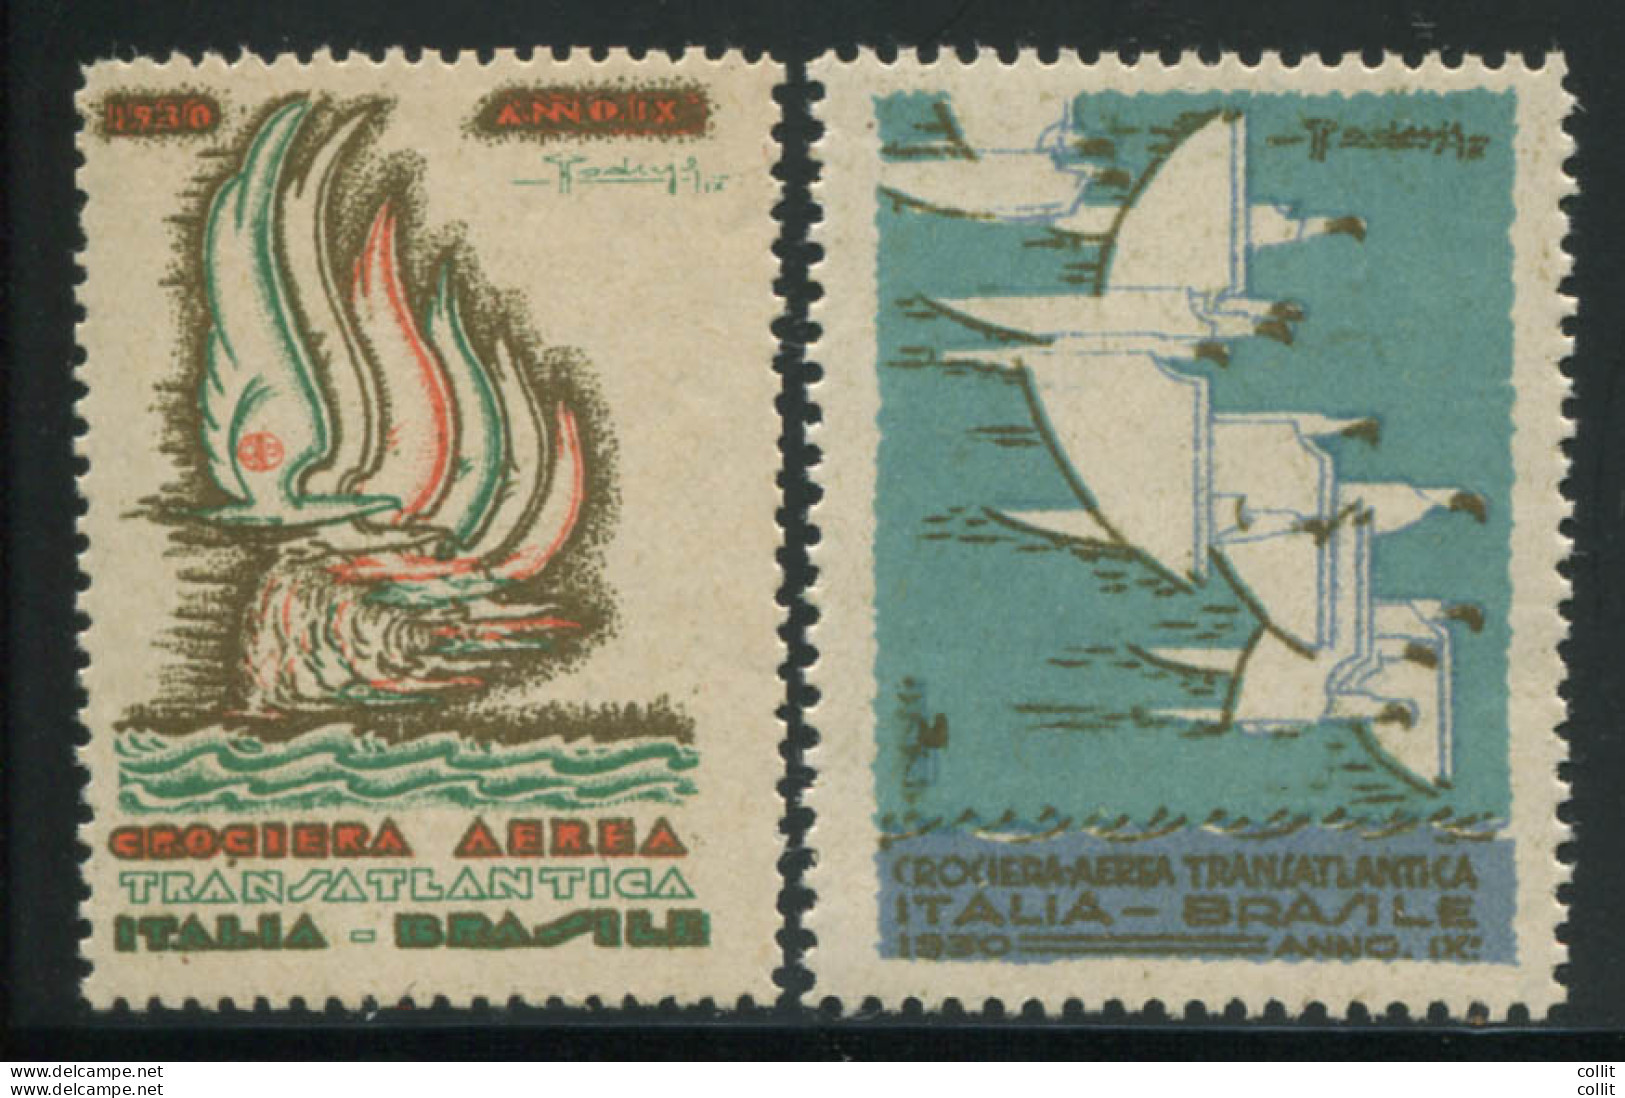 1930 Crociera Aerea Transatlantica - I Due Erinnofili Commemorativi - Balbo - Storia Postale (Posta Aerea)